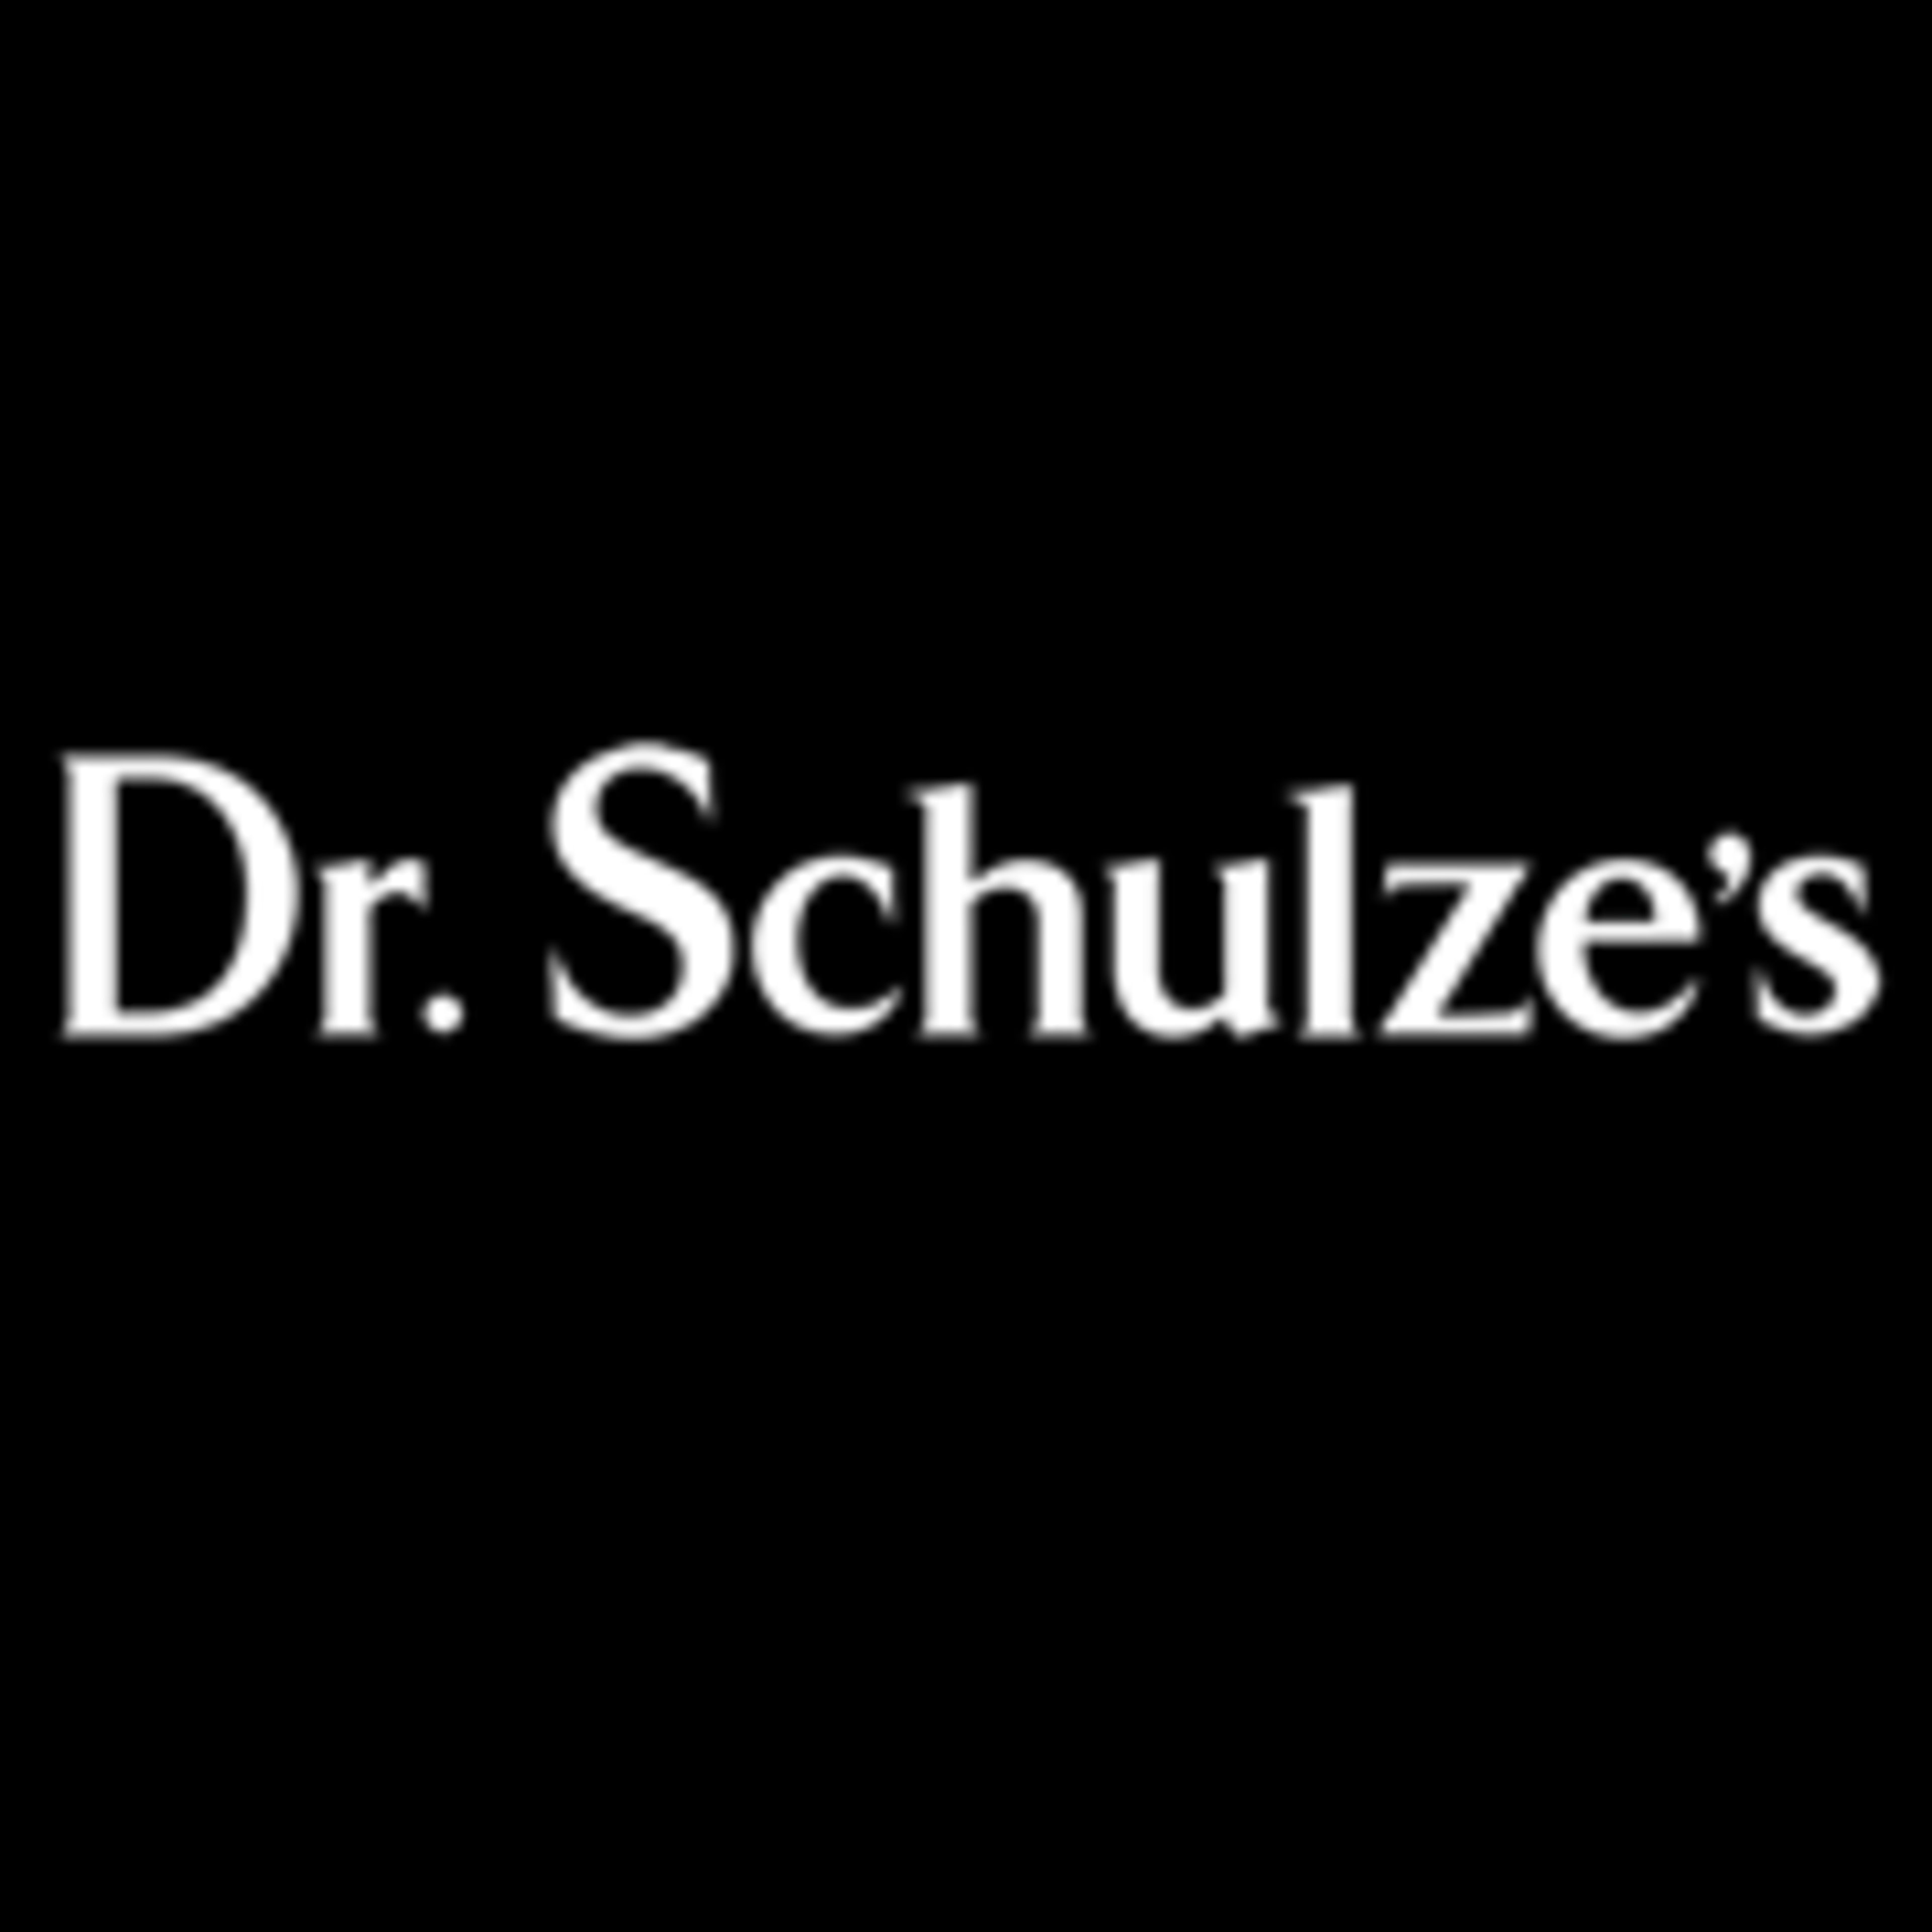 Dr. Schulze's Original Clinical FormulaeCode